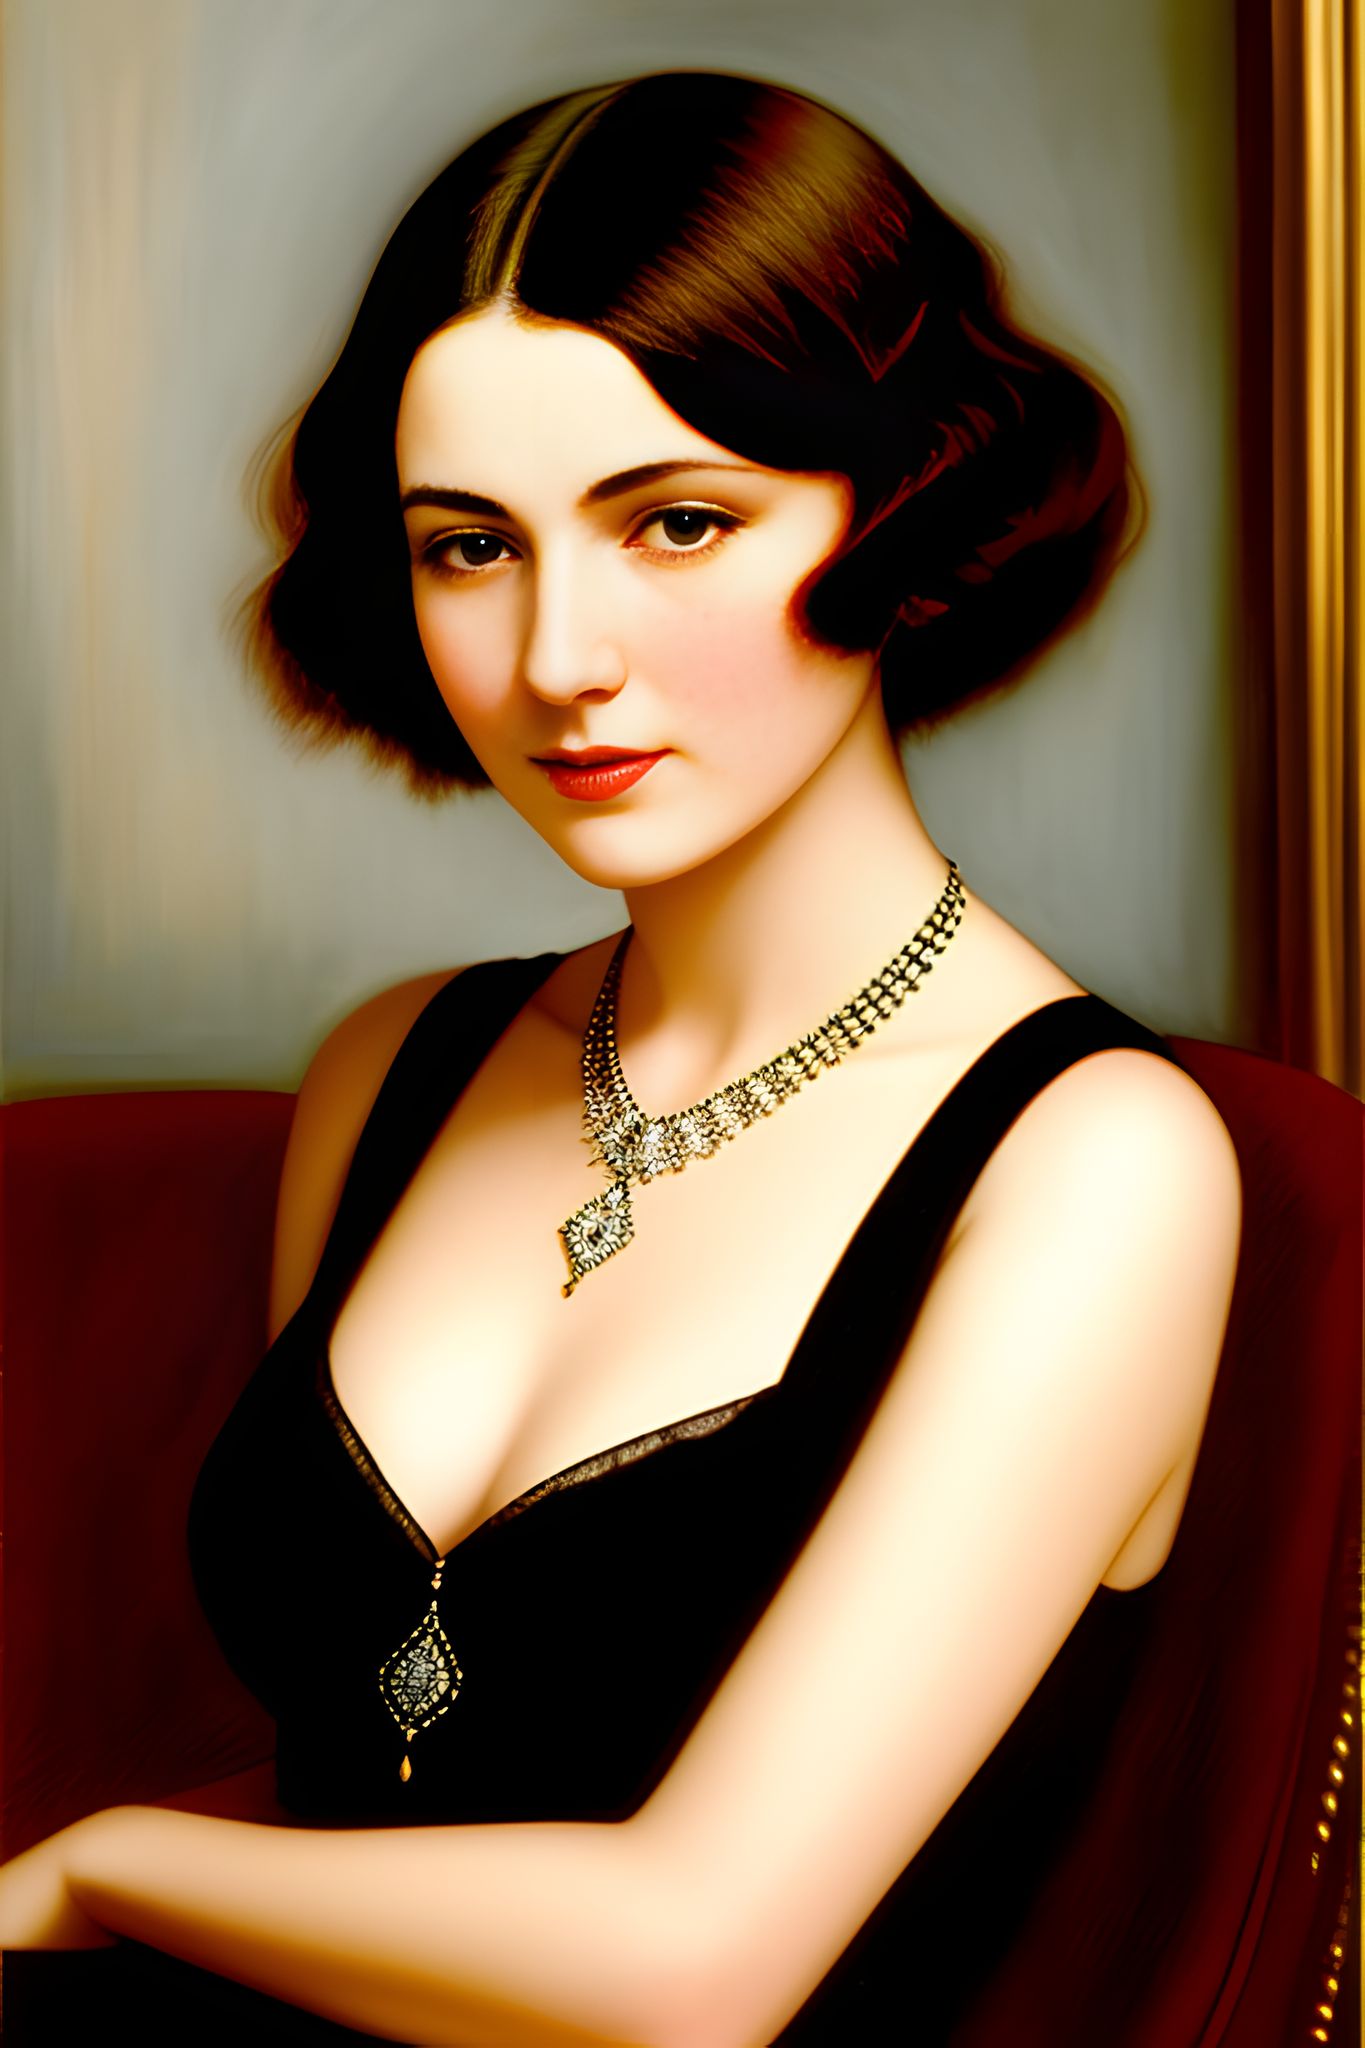 high-detail-portrait-of-a-Artist-in-the-1920s-jvss